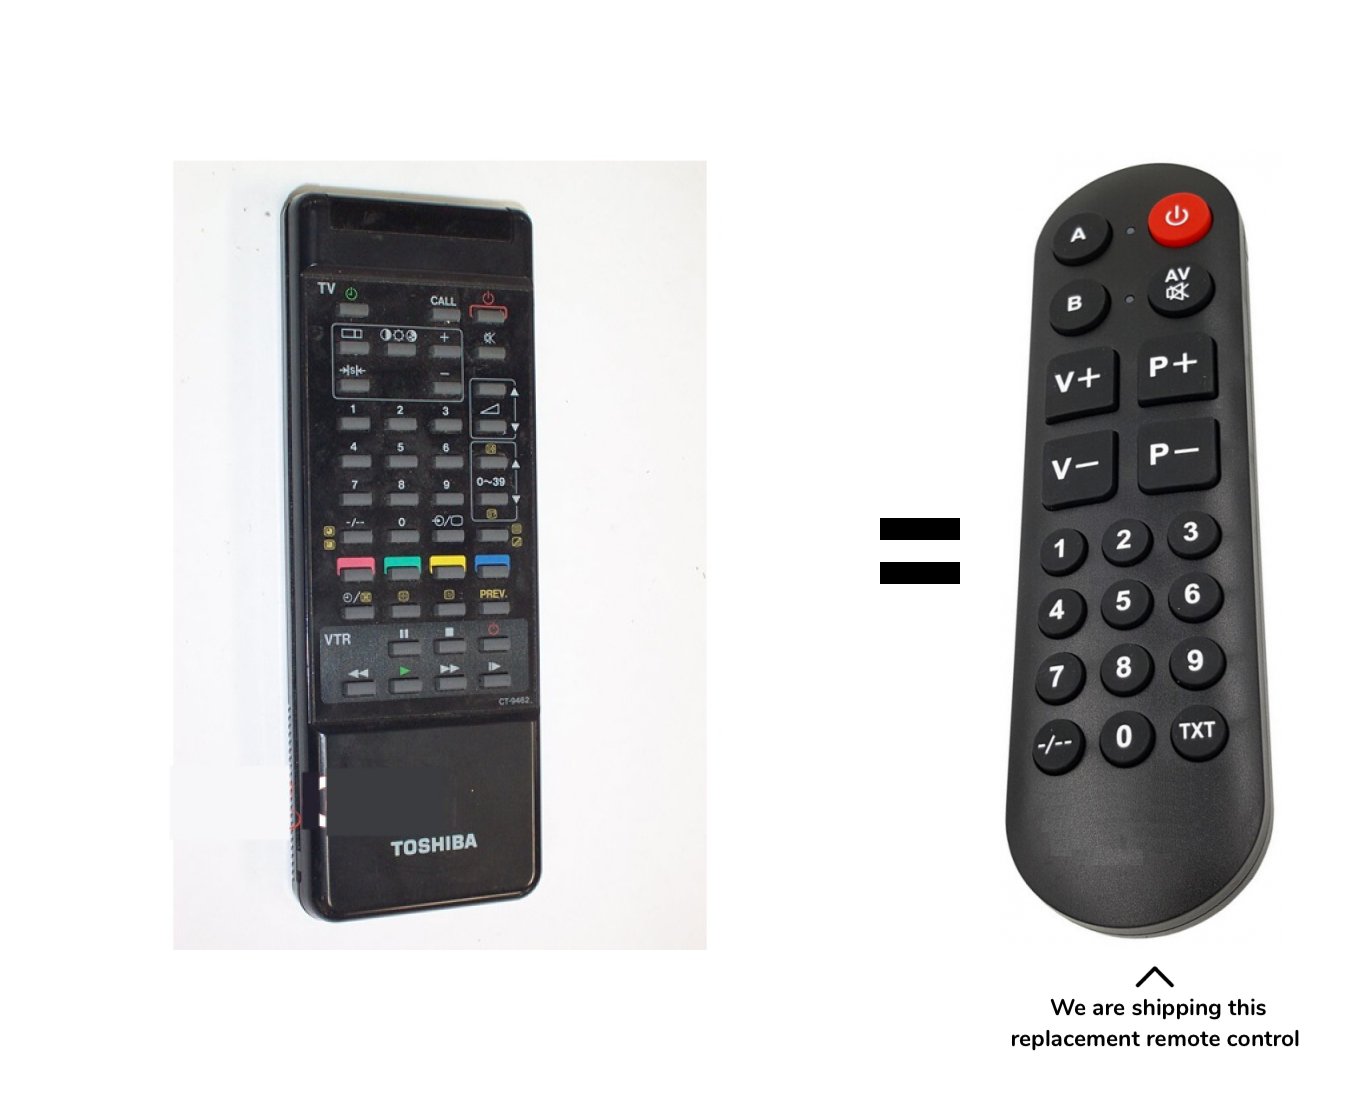 Toshiba CT-9391 remote control for seniors